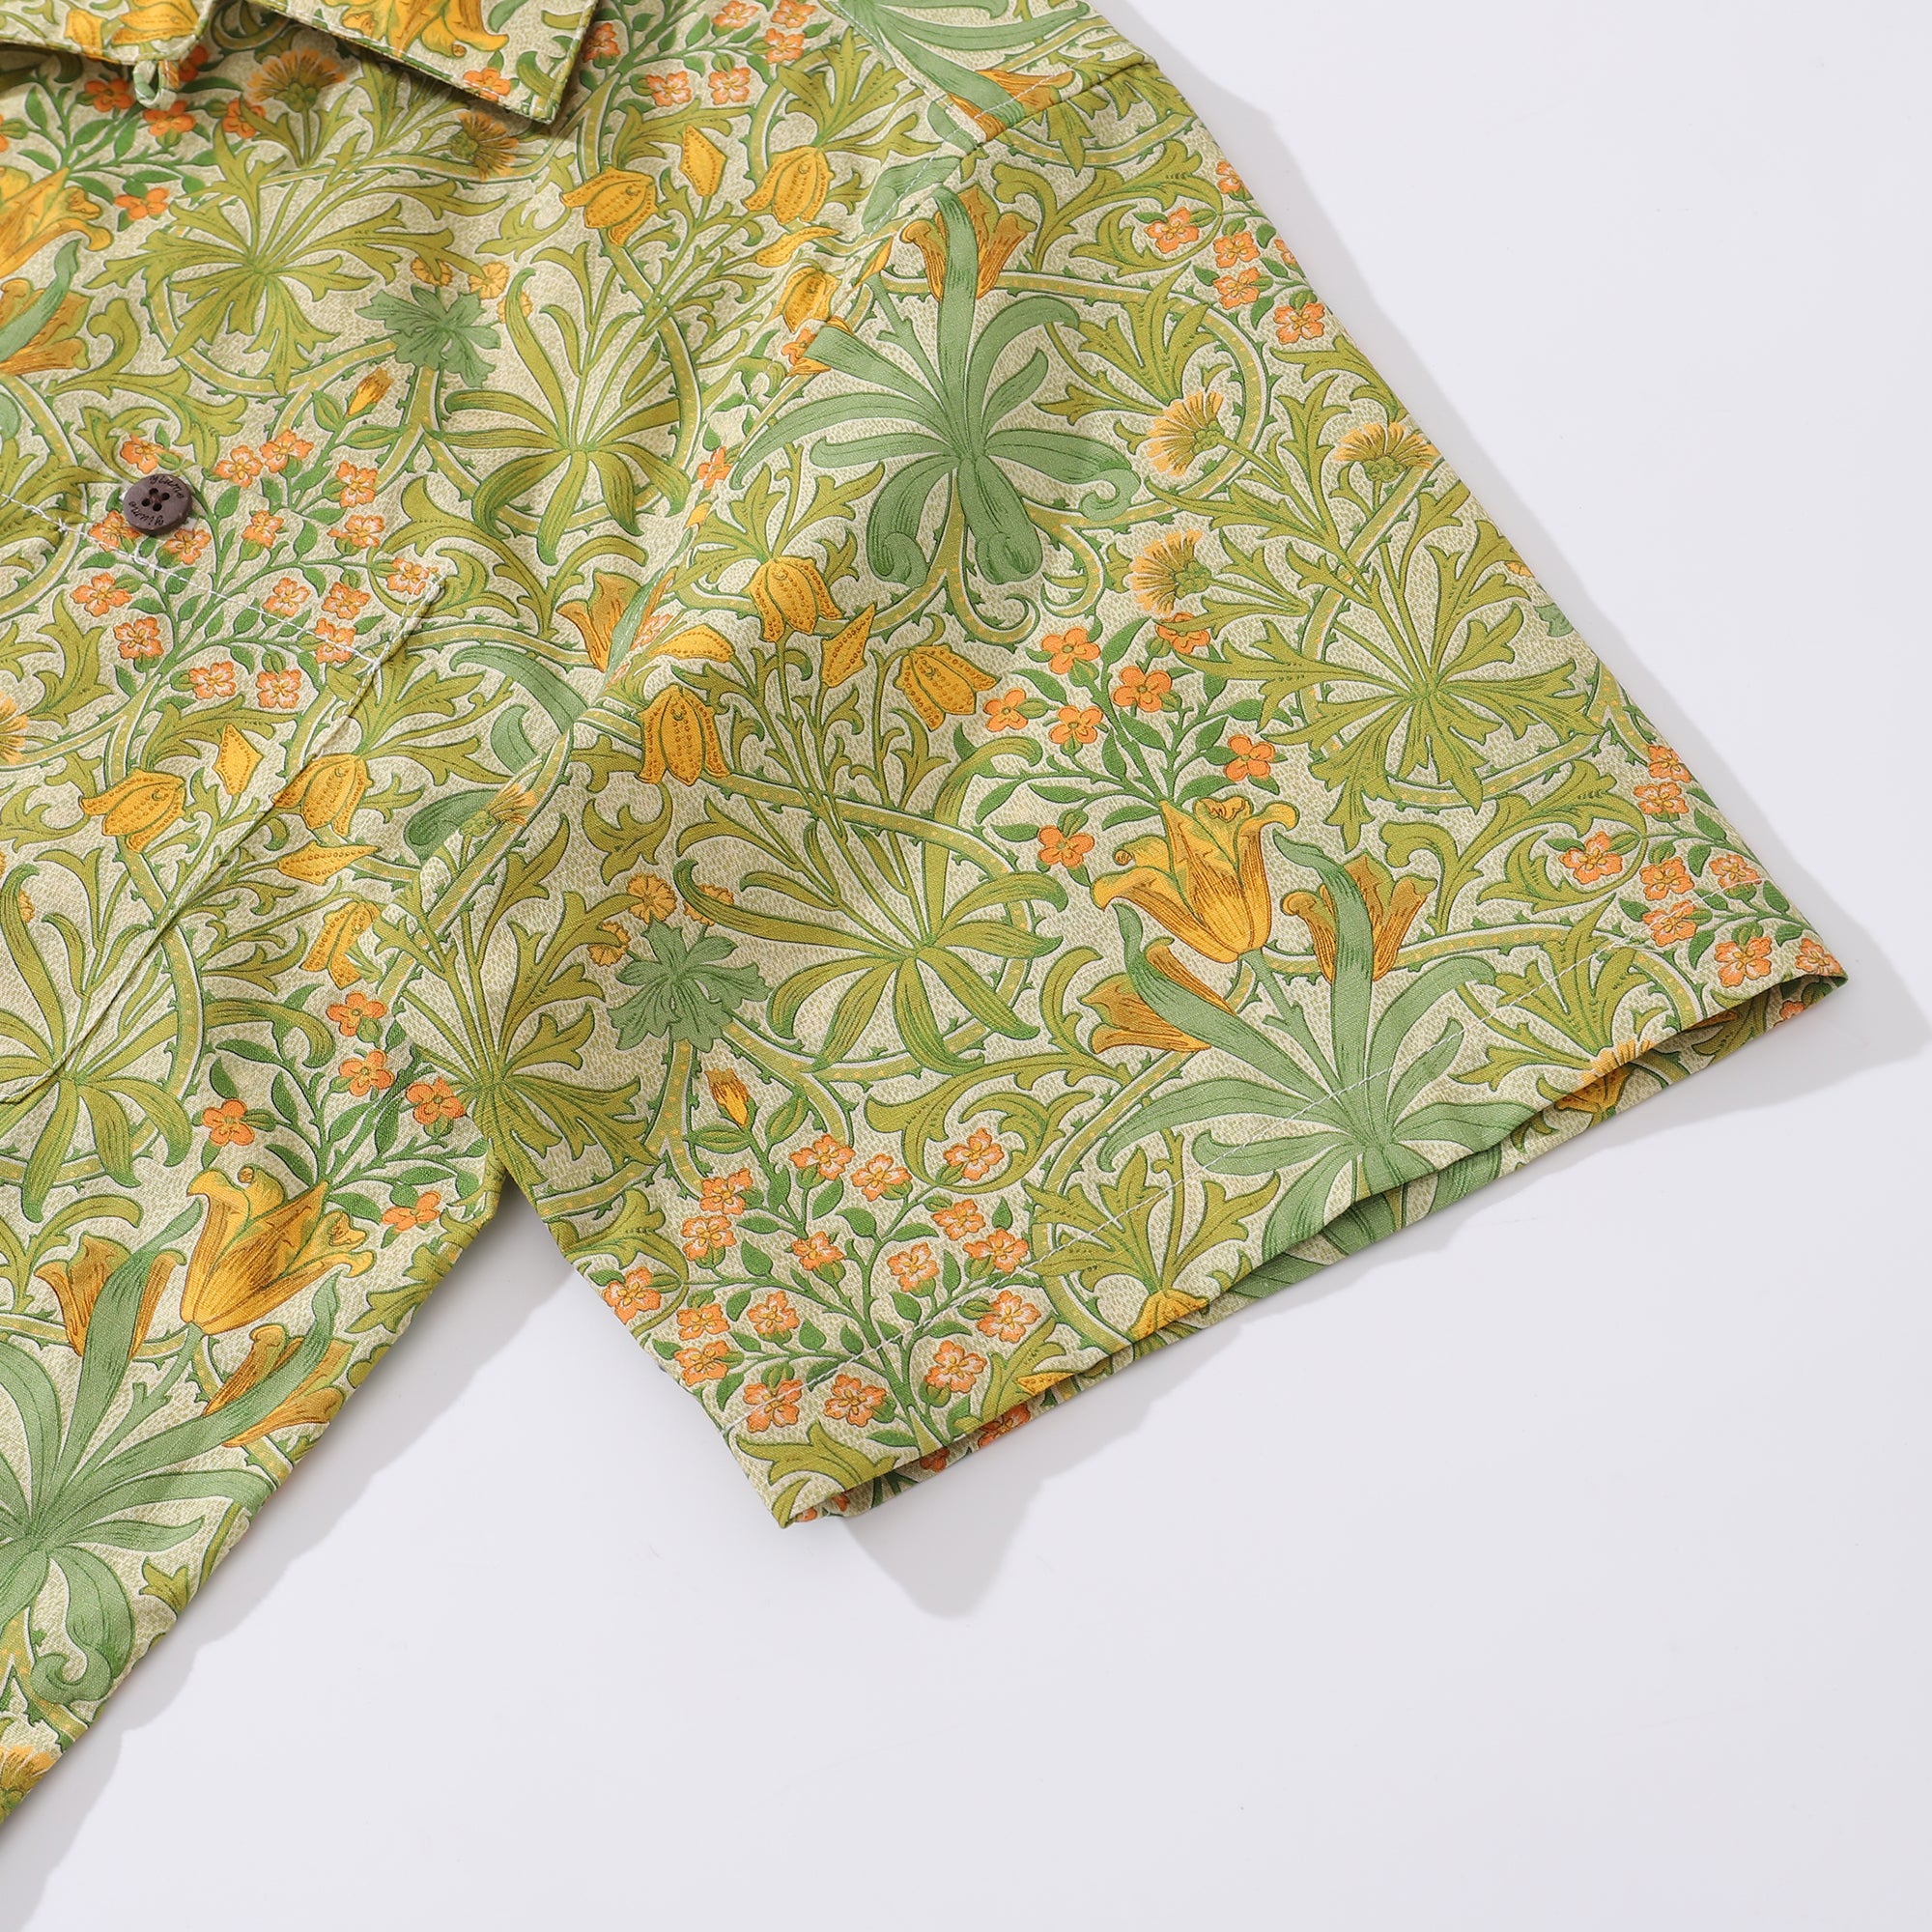 Hawaiian Shirt For Men Summer Yellow Tones Shirt Camp Collar 100% Cotton